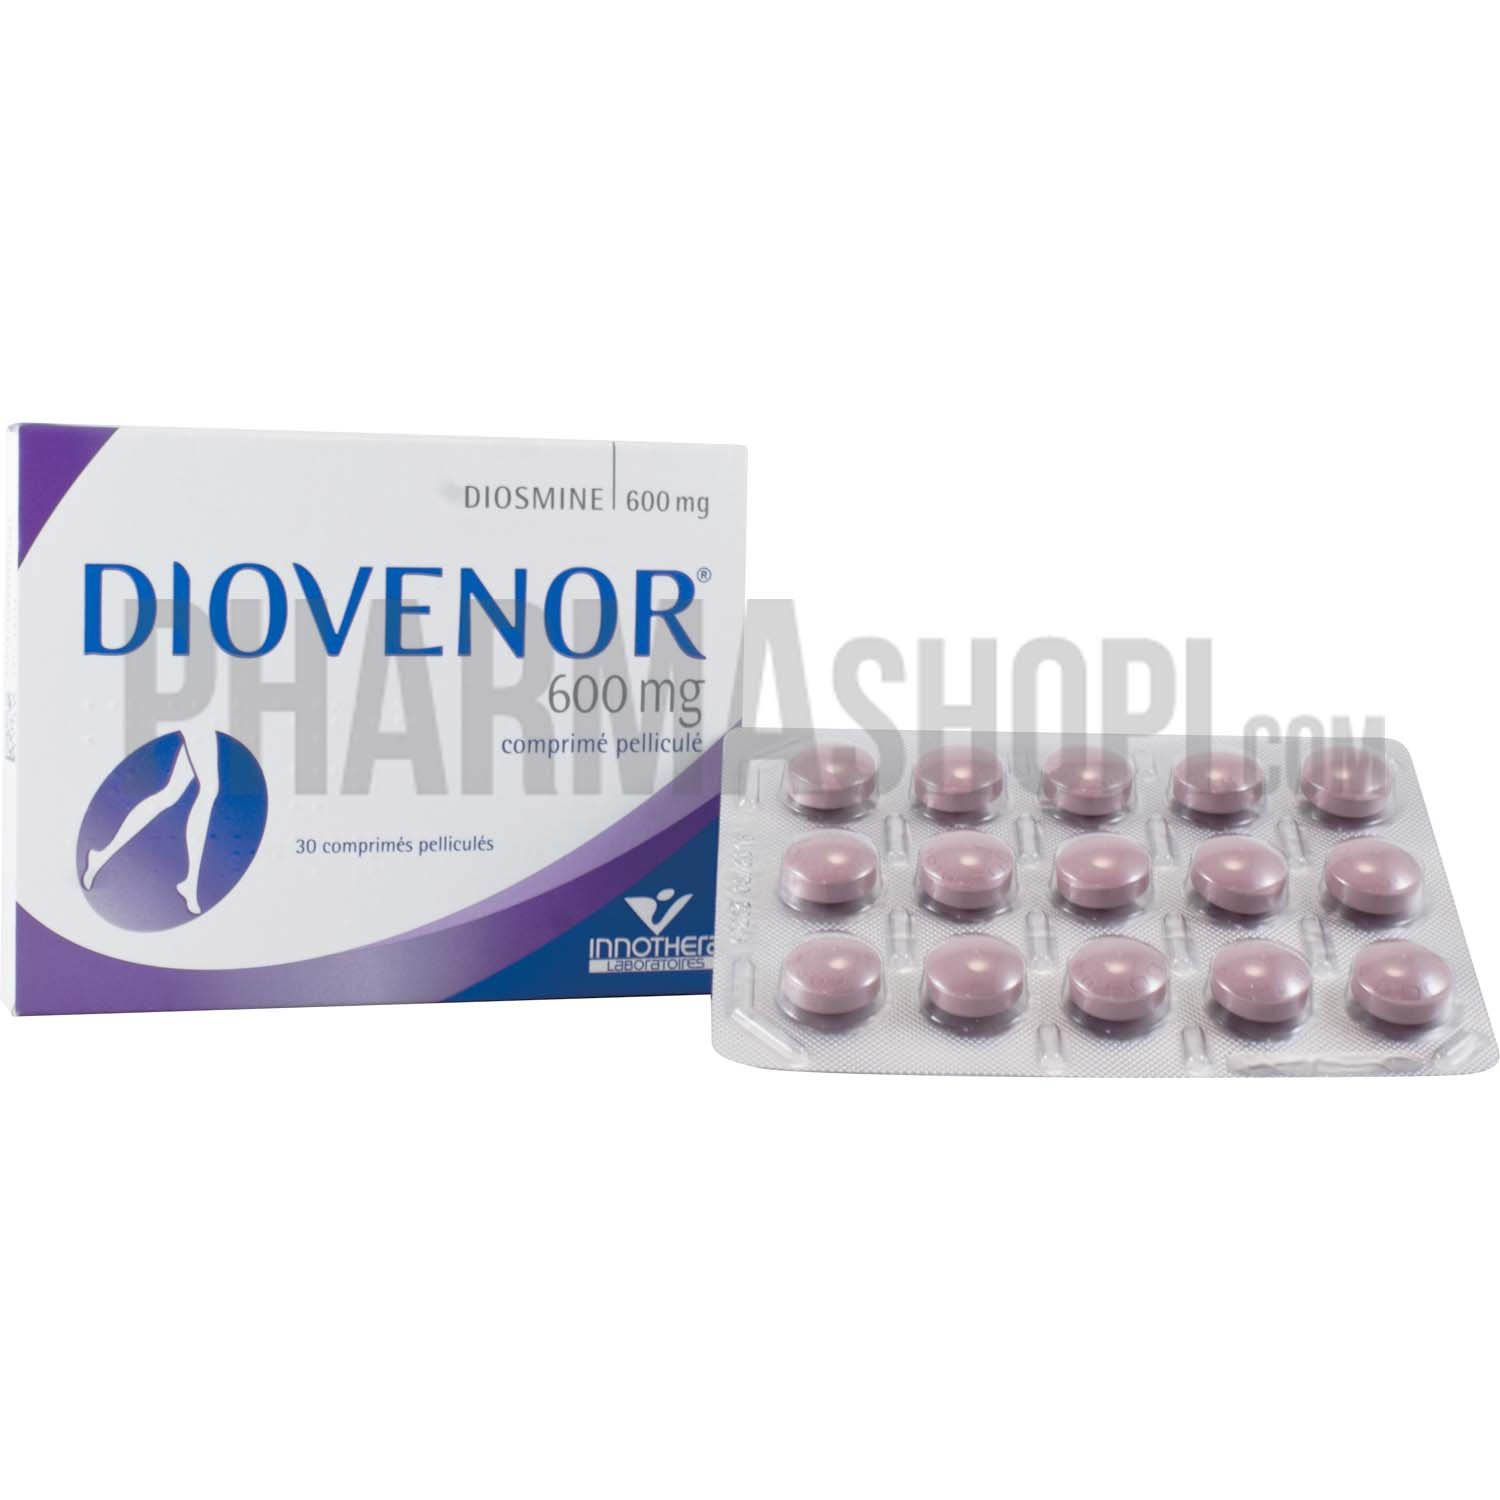 Diovenor 600mg comprimé pelliculé - boîte de 30 comprimés